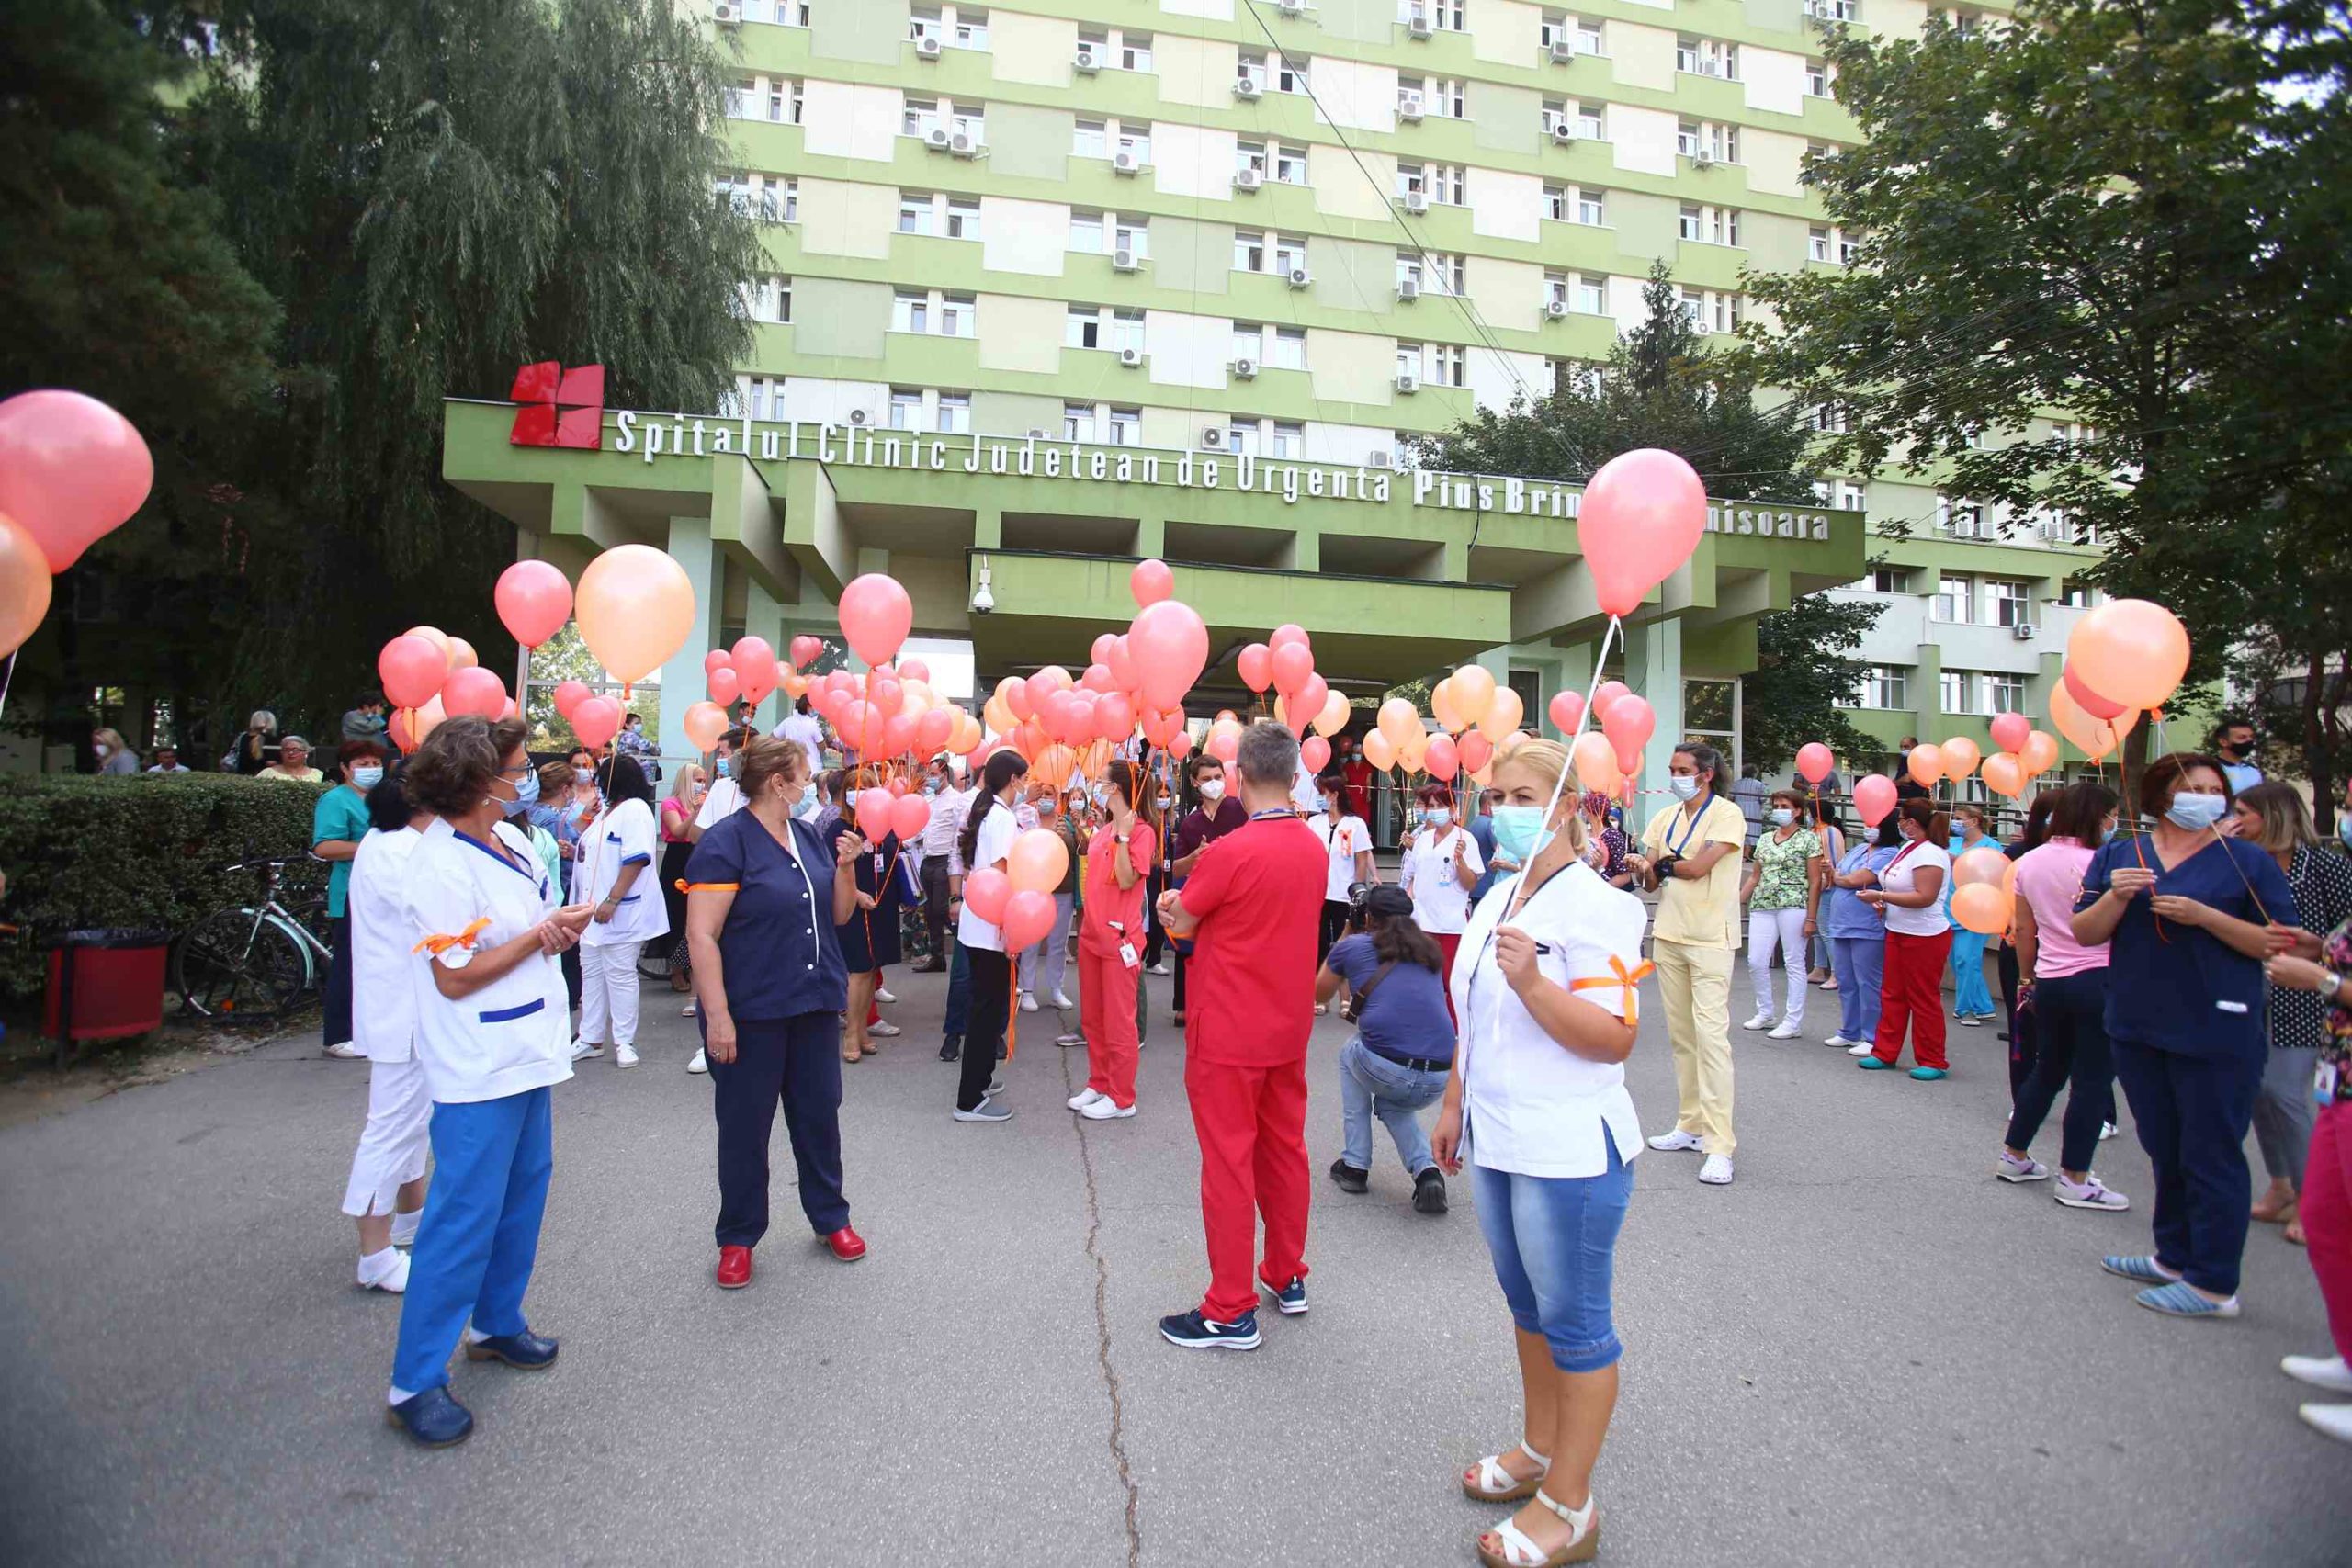 spitalul judetean baloane (7)